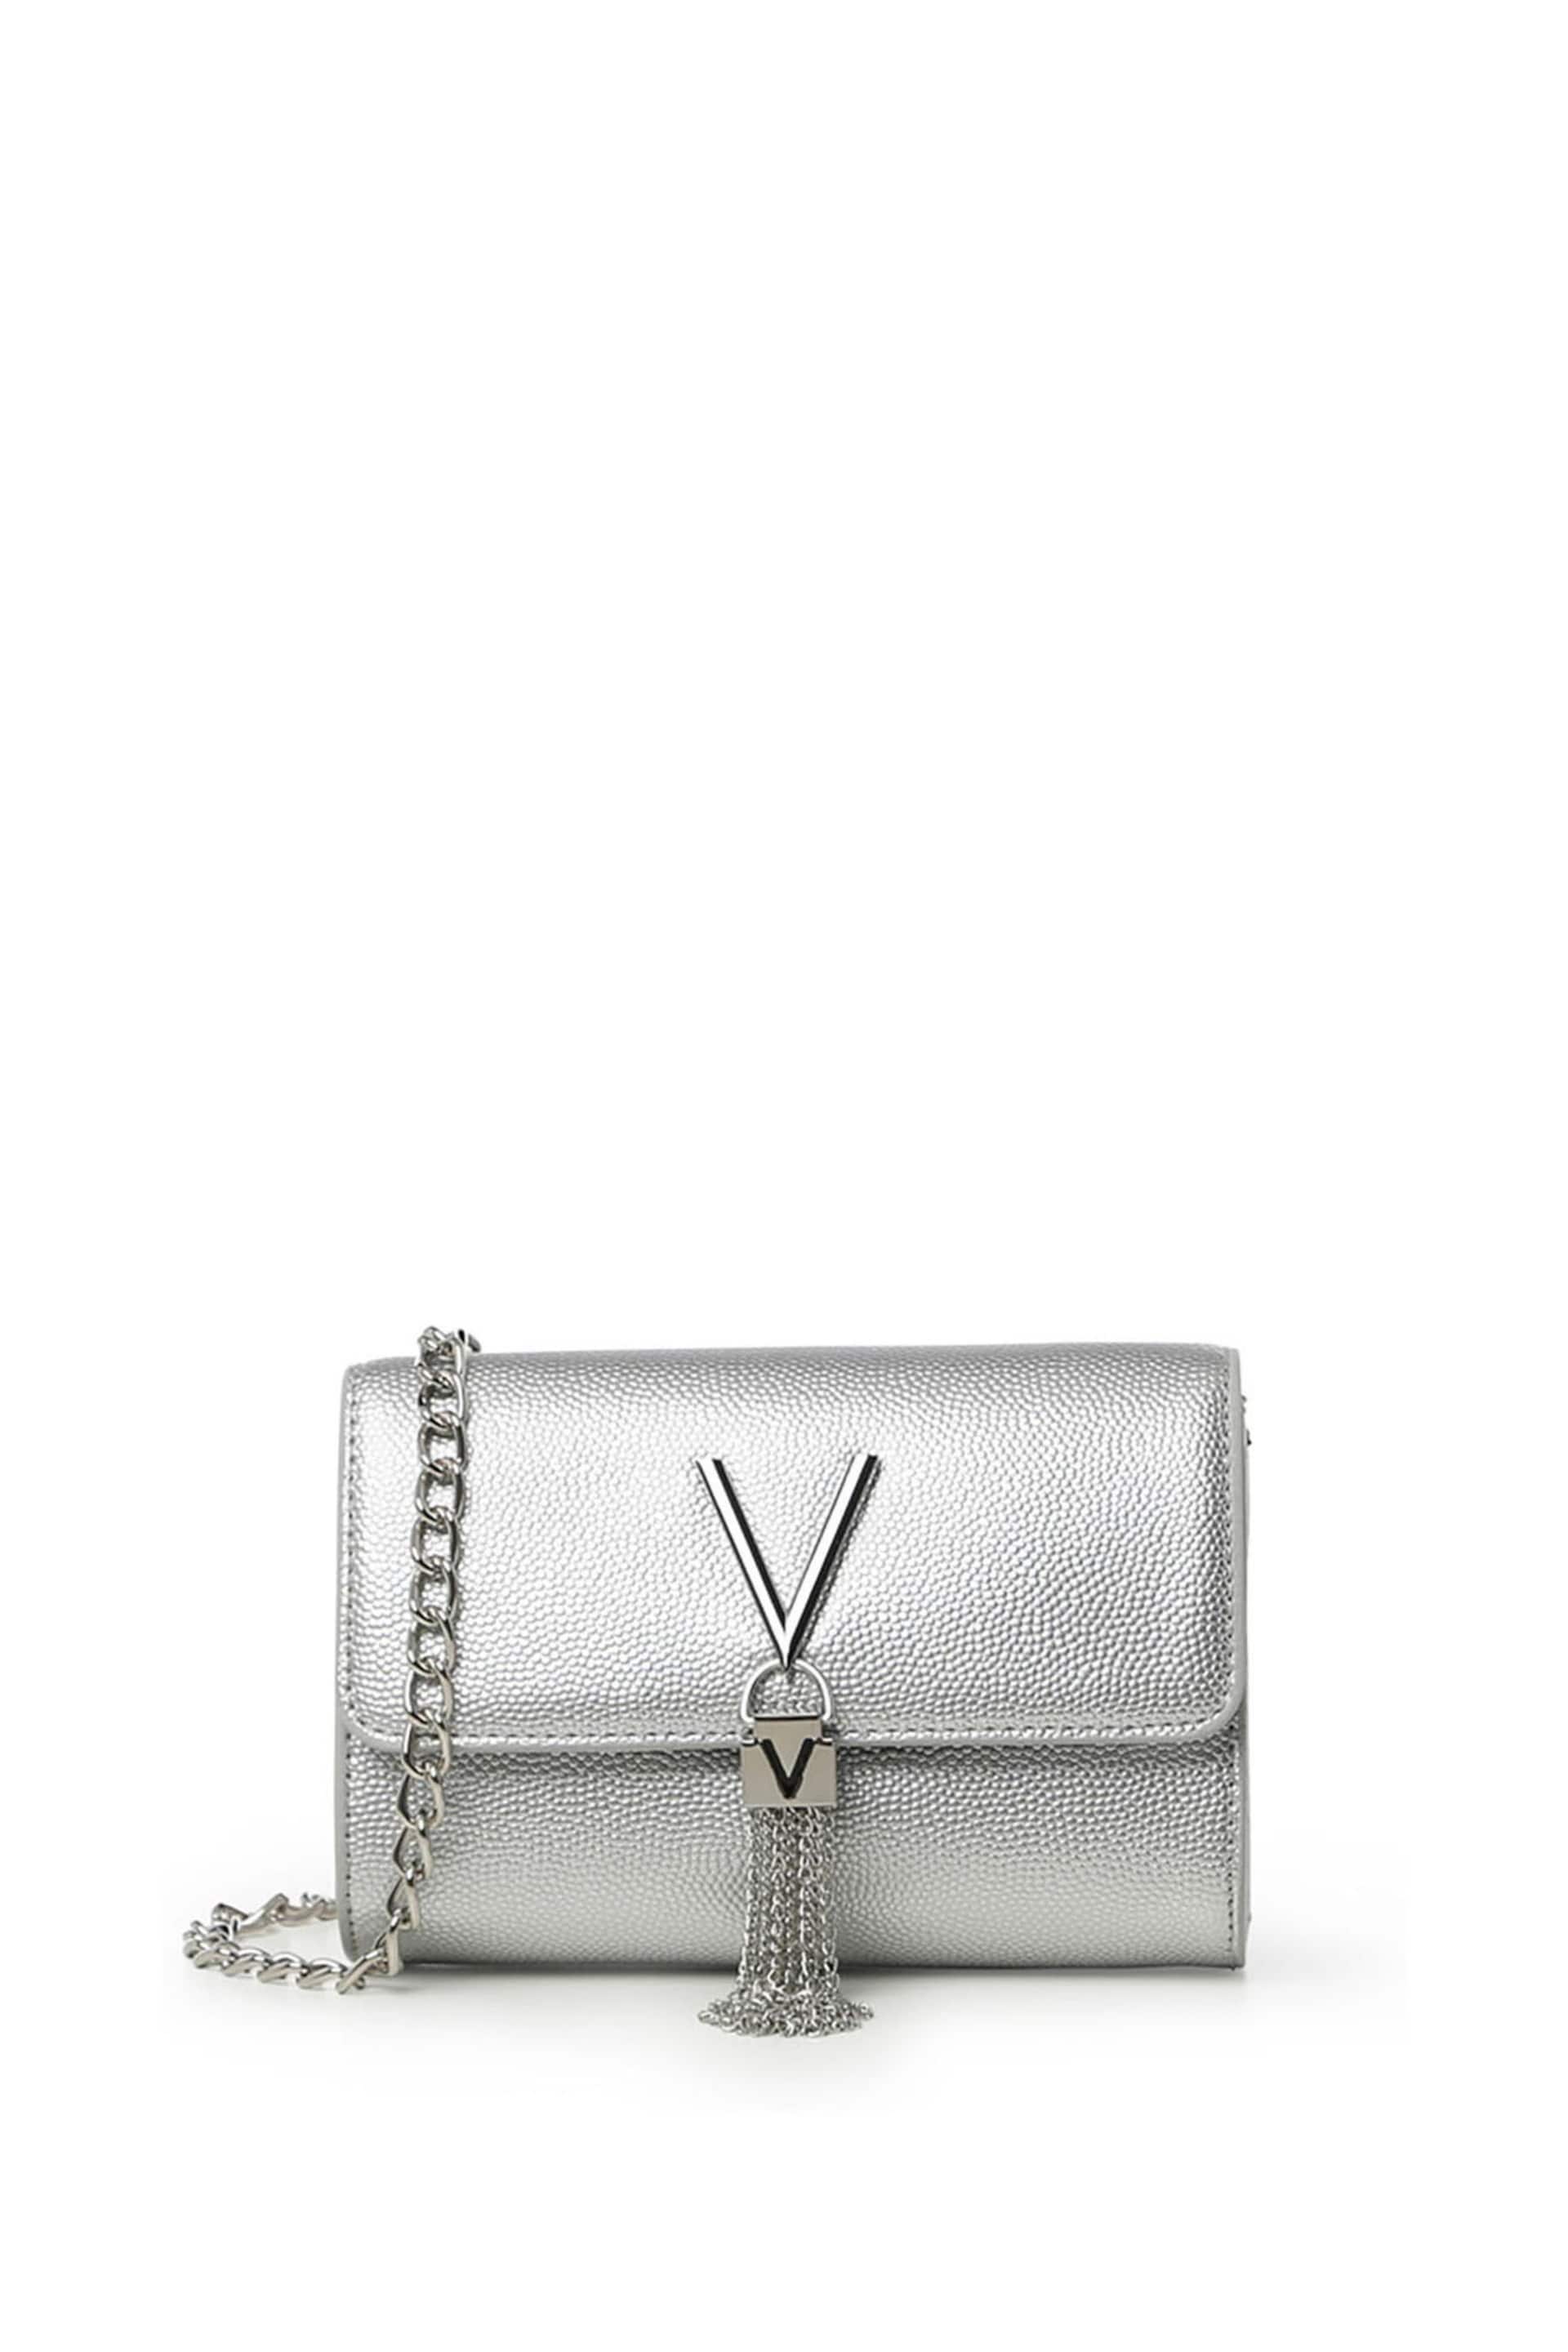 Valentino Bags Grey Divina Chain Crossbody Tassel Bag - Image 1 of 2